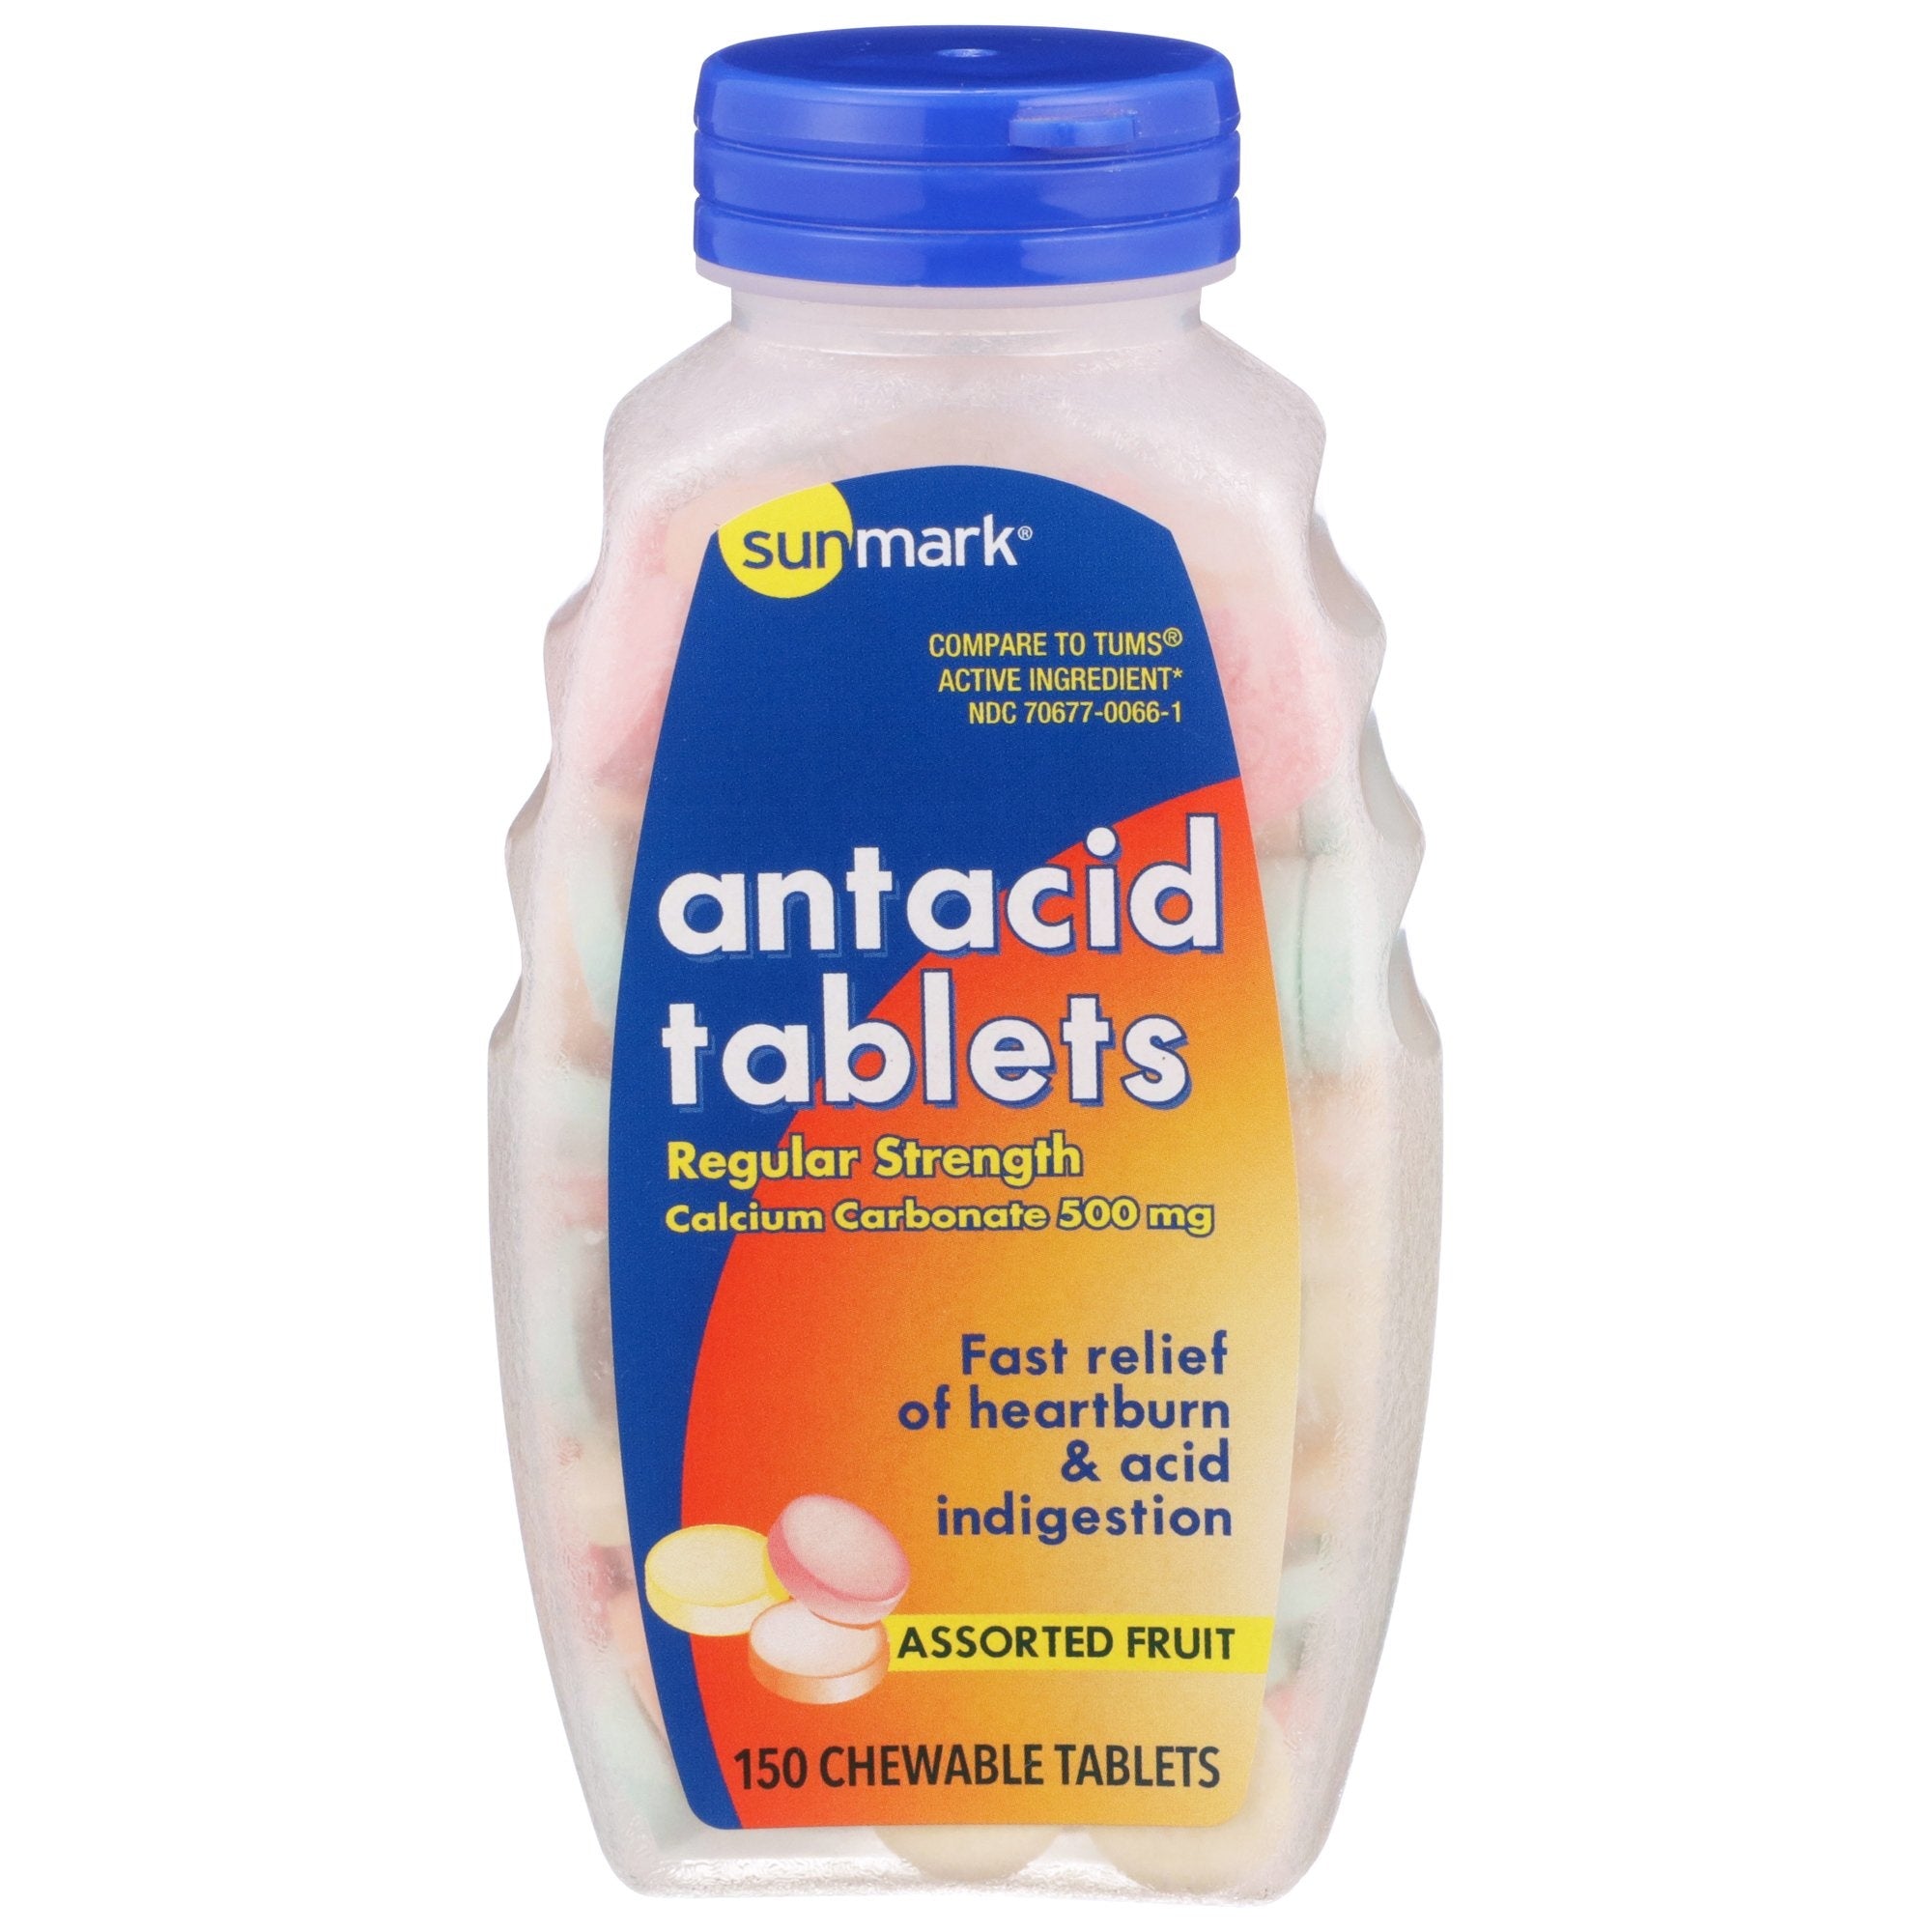 Antacid tablets 150 chewable tablets